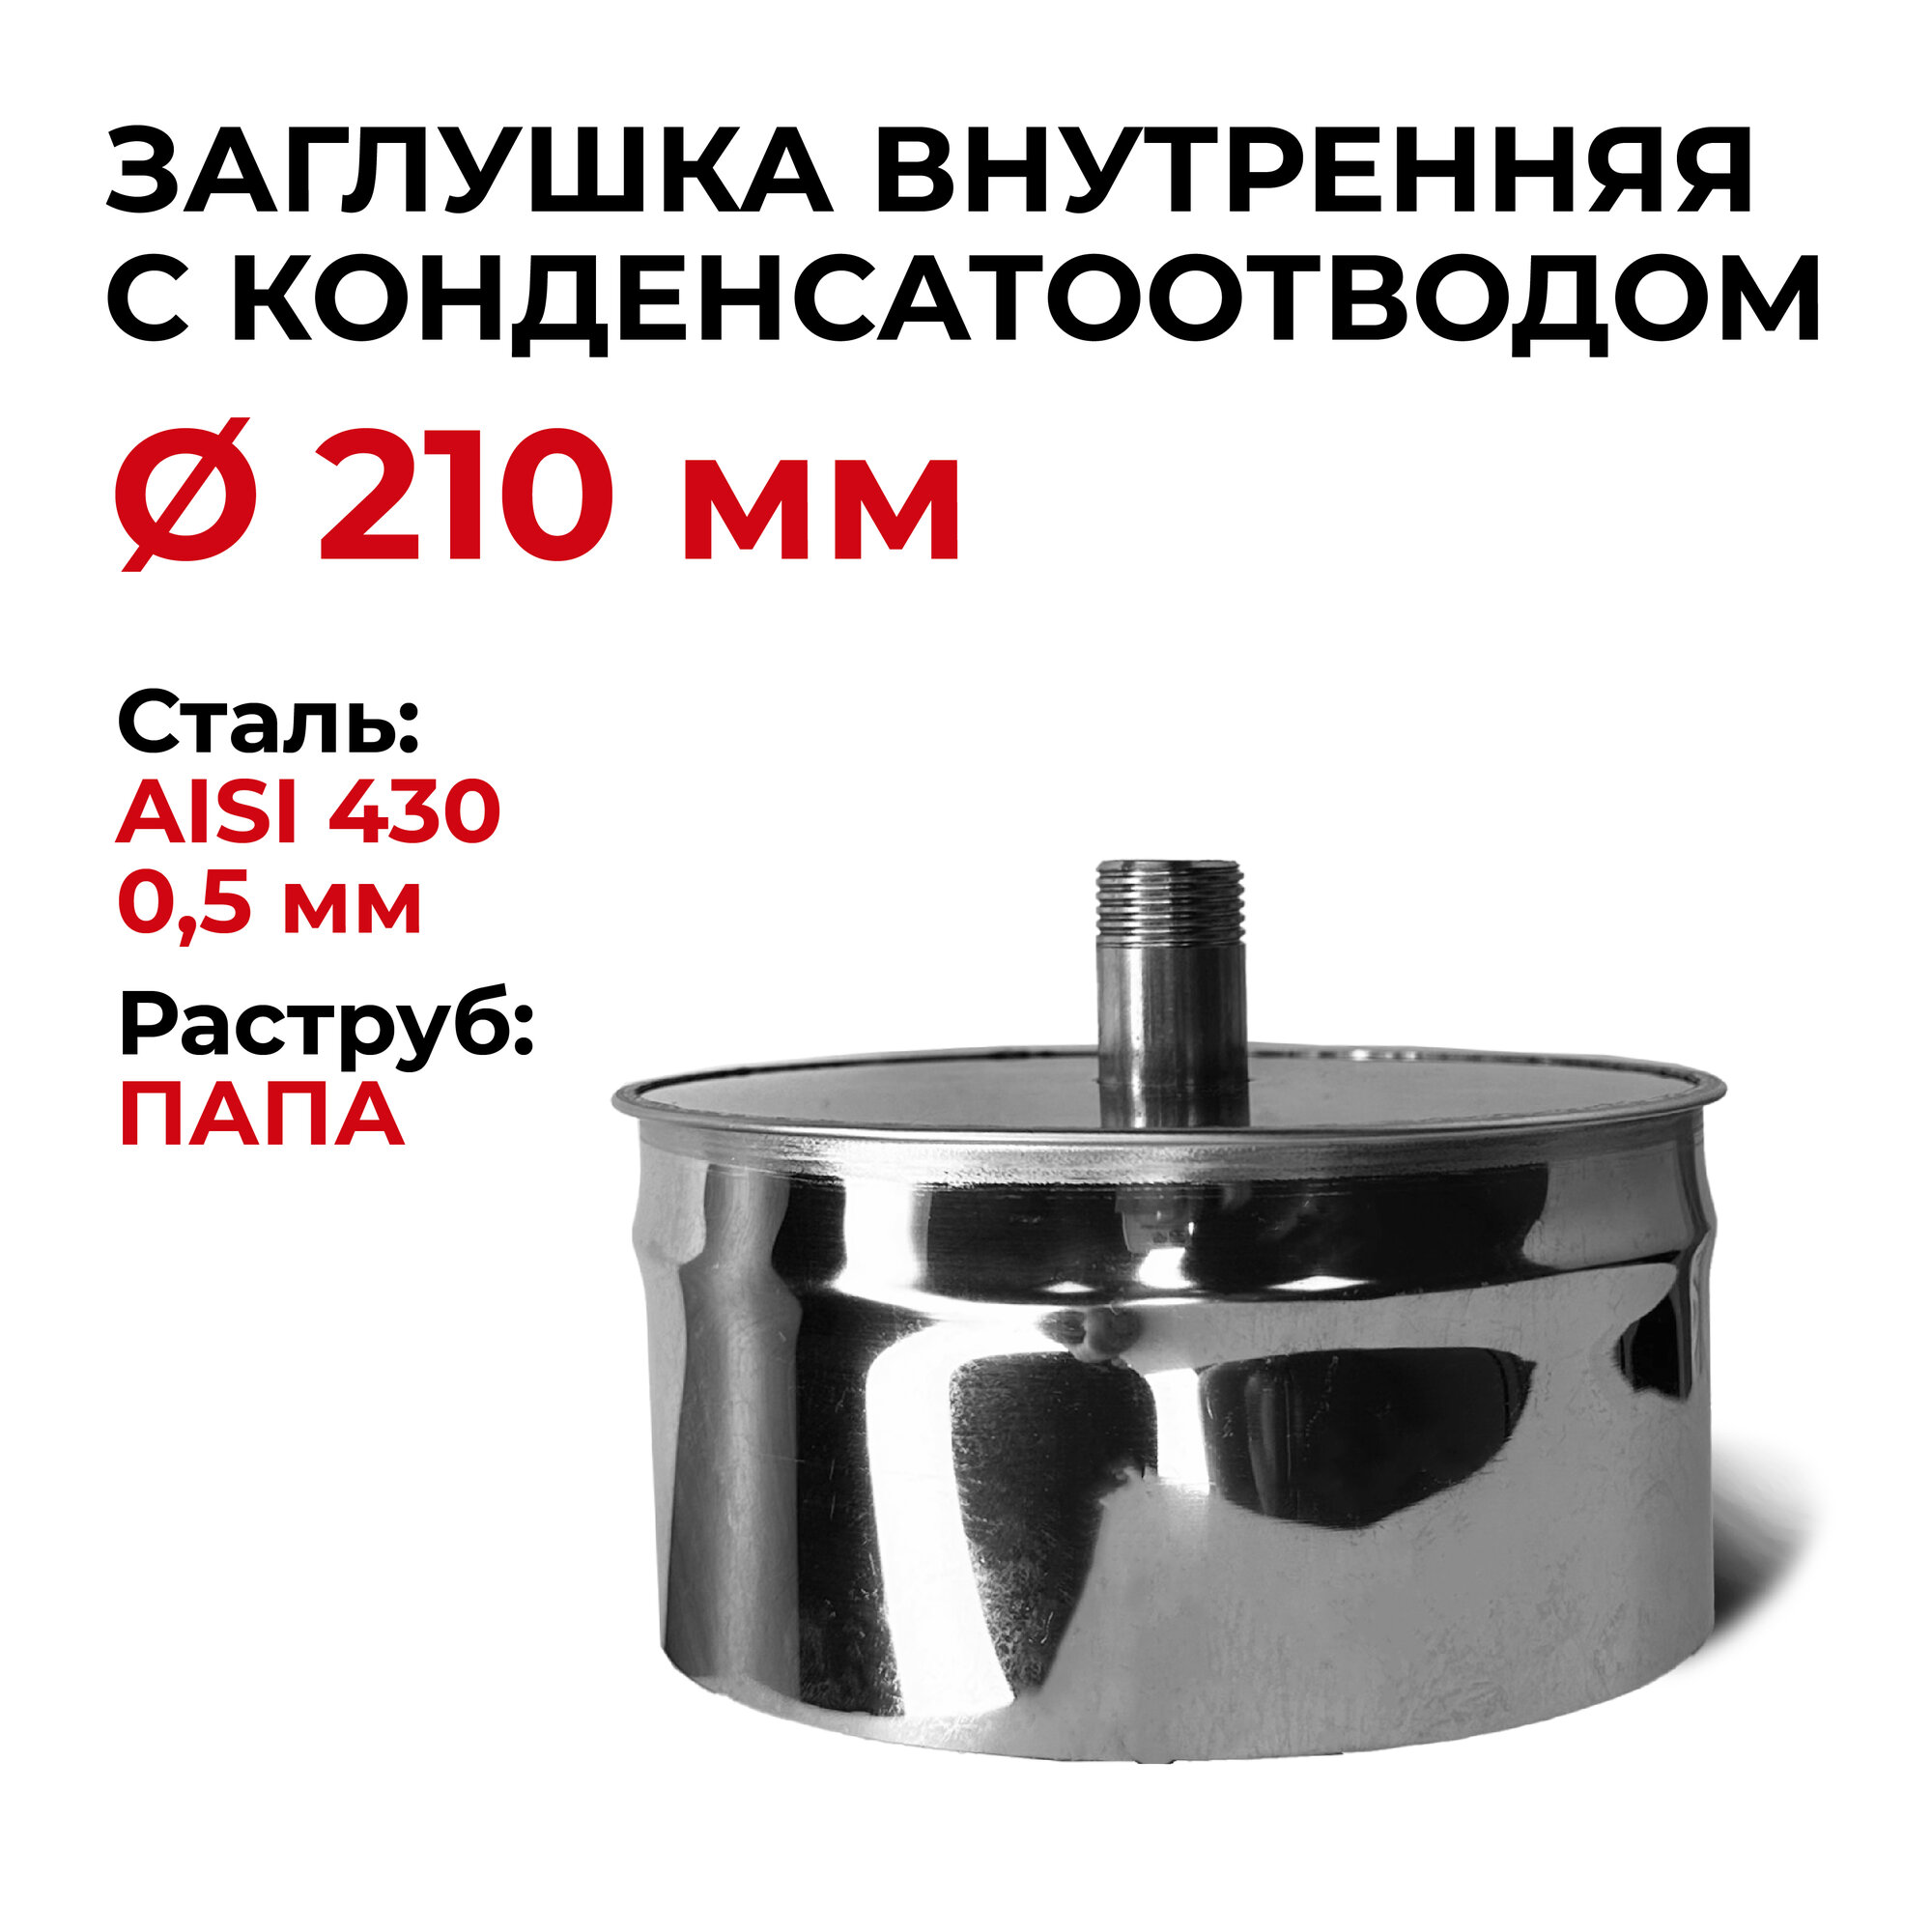 Заглушка для ревизии с конденсатоотводом 1/2 внутренняя папа D 210 мм "Прок"